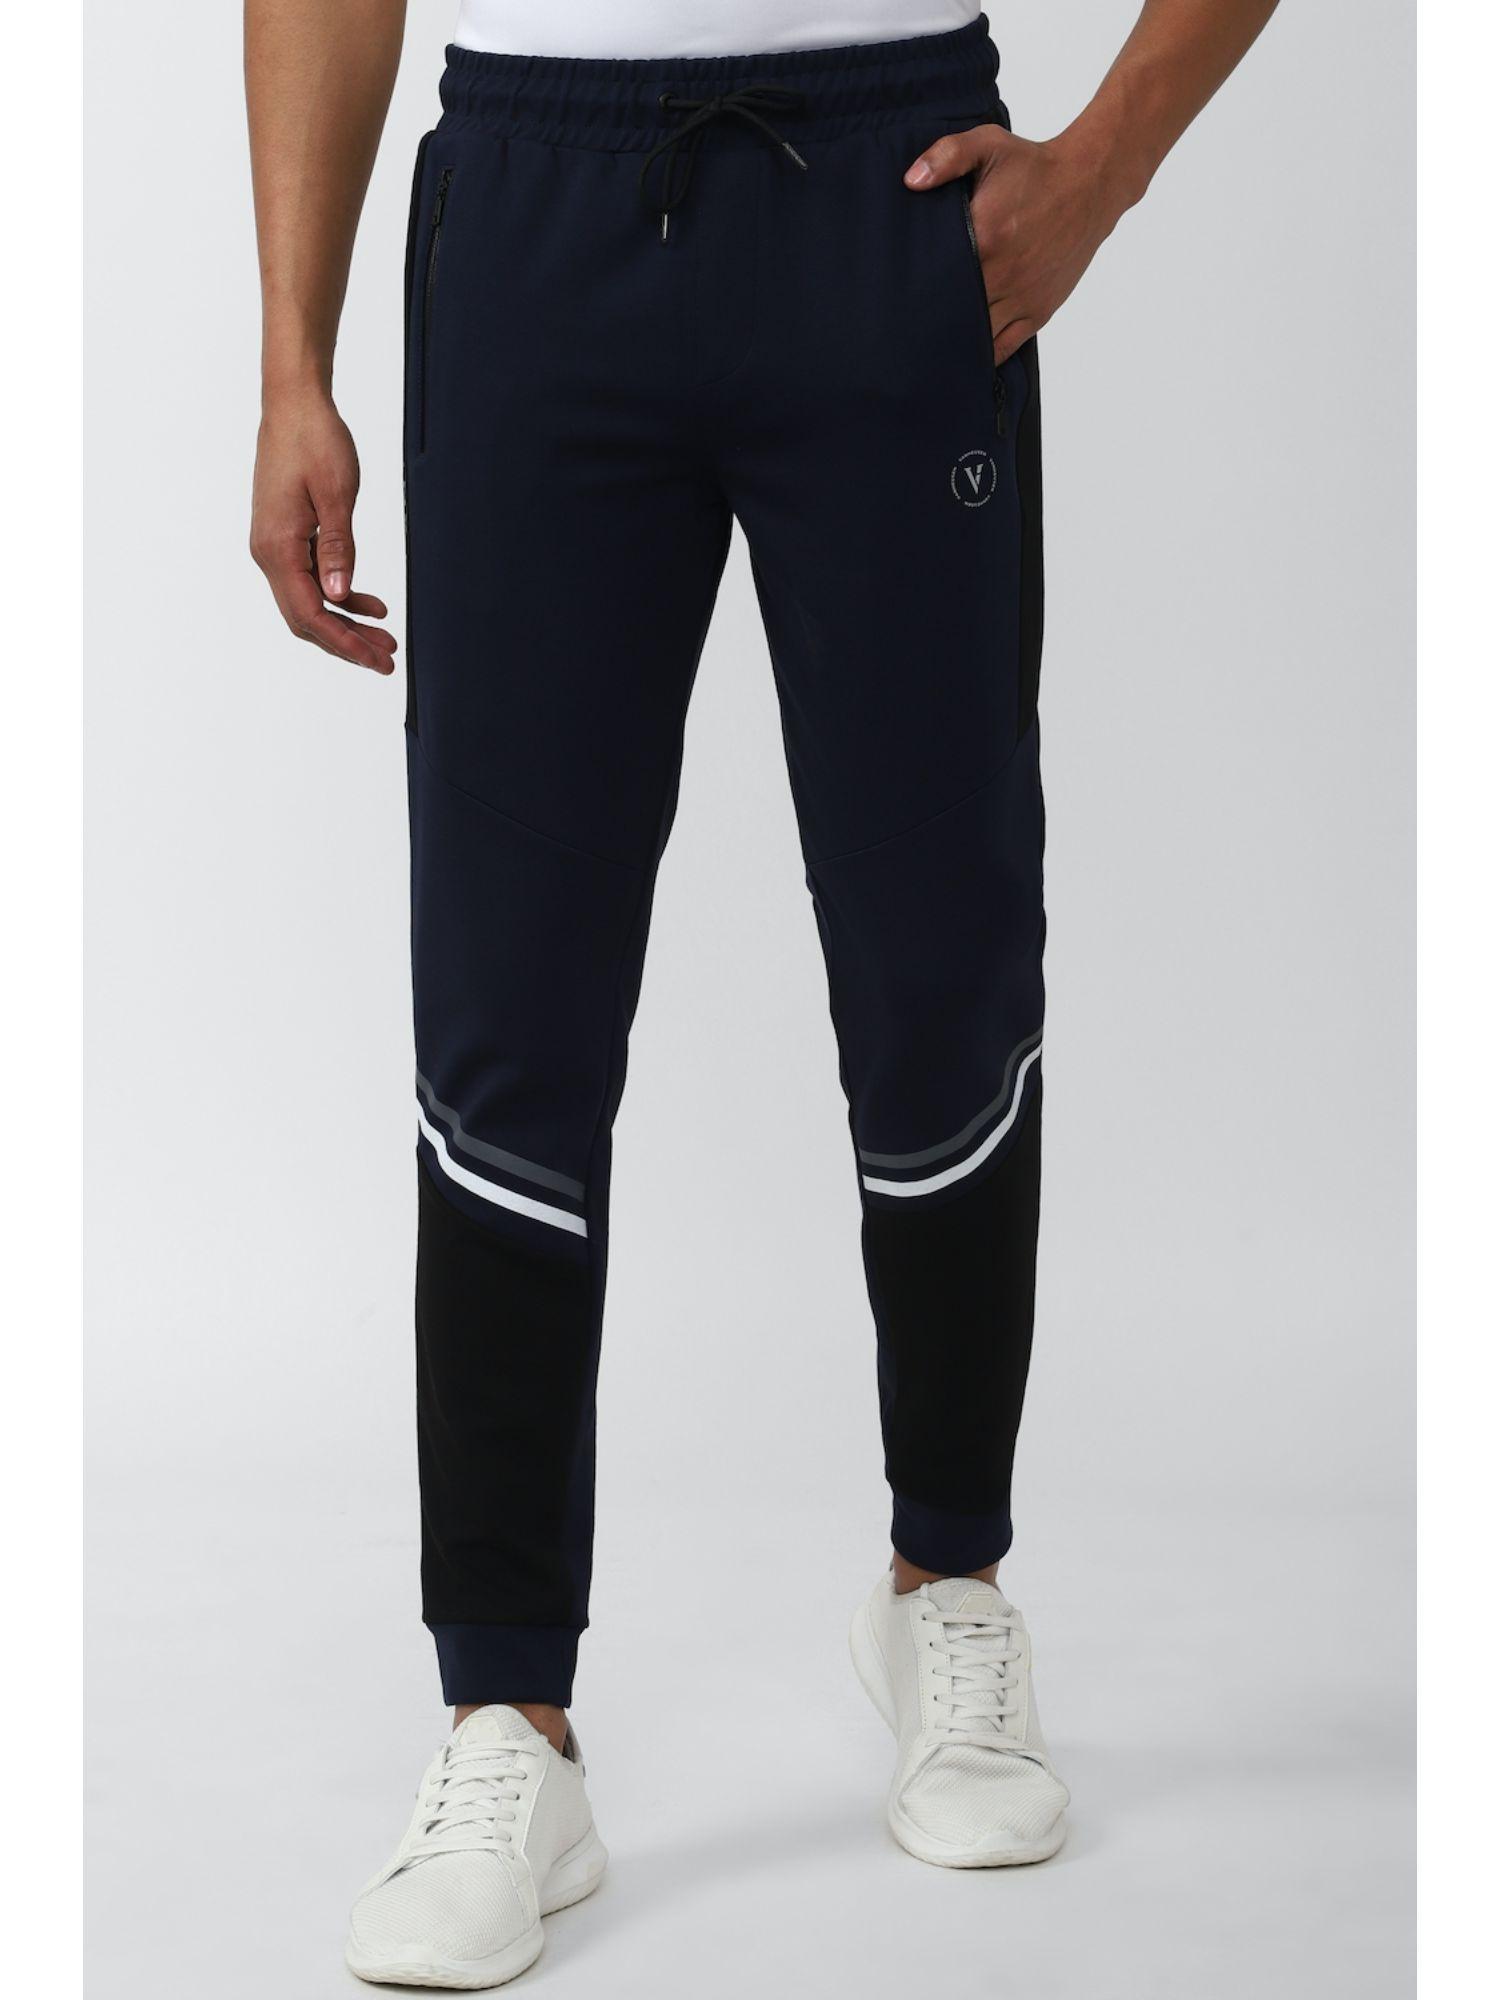 navy jogger pants